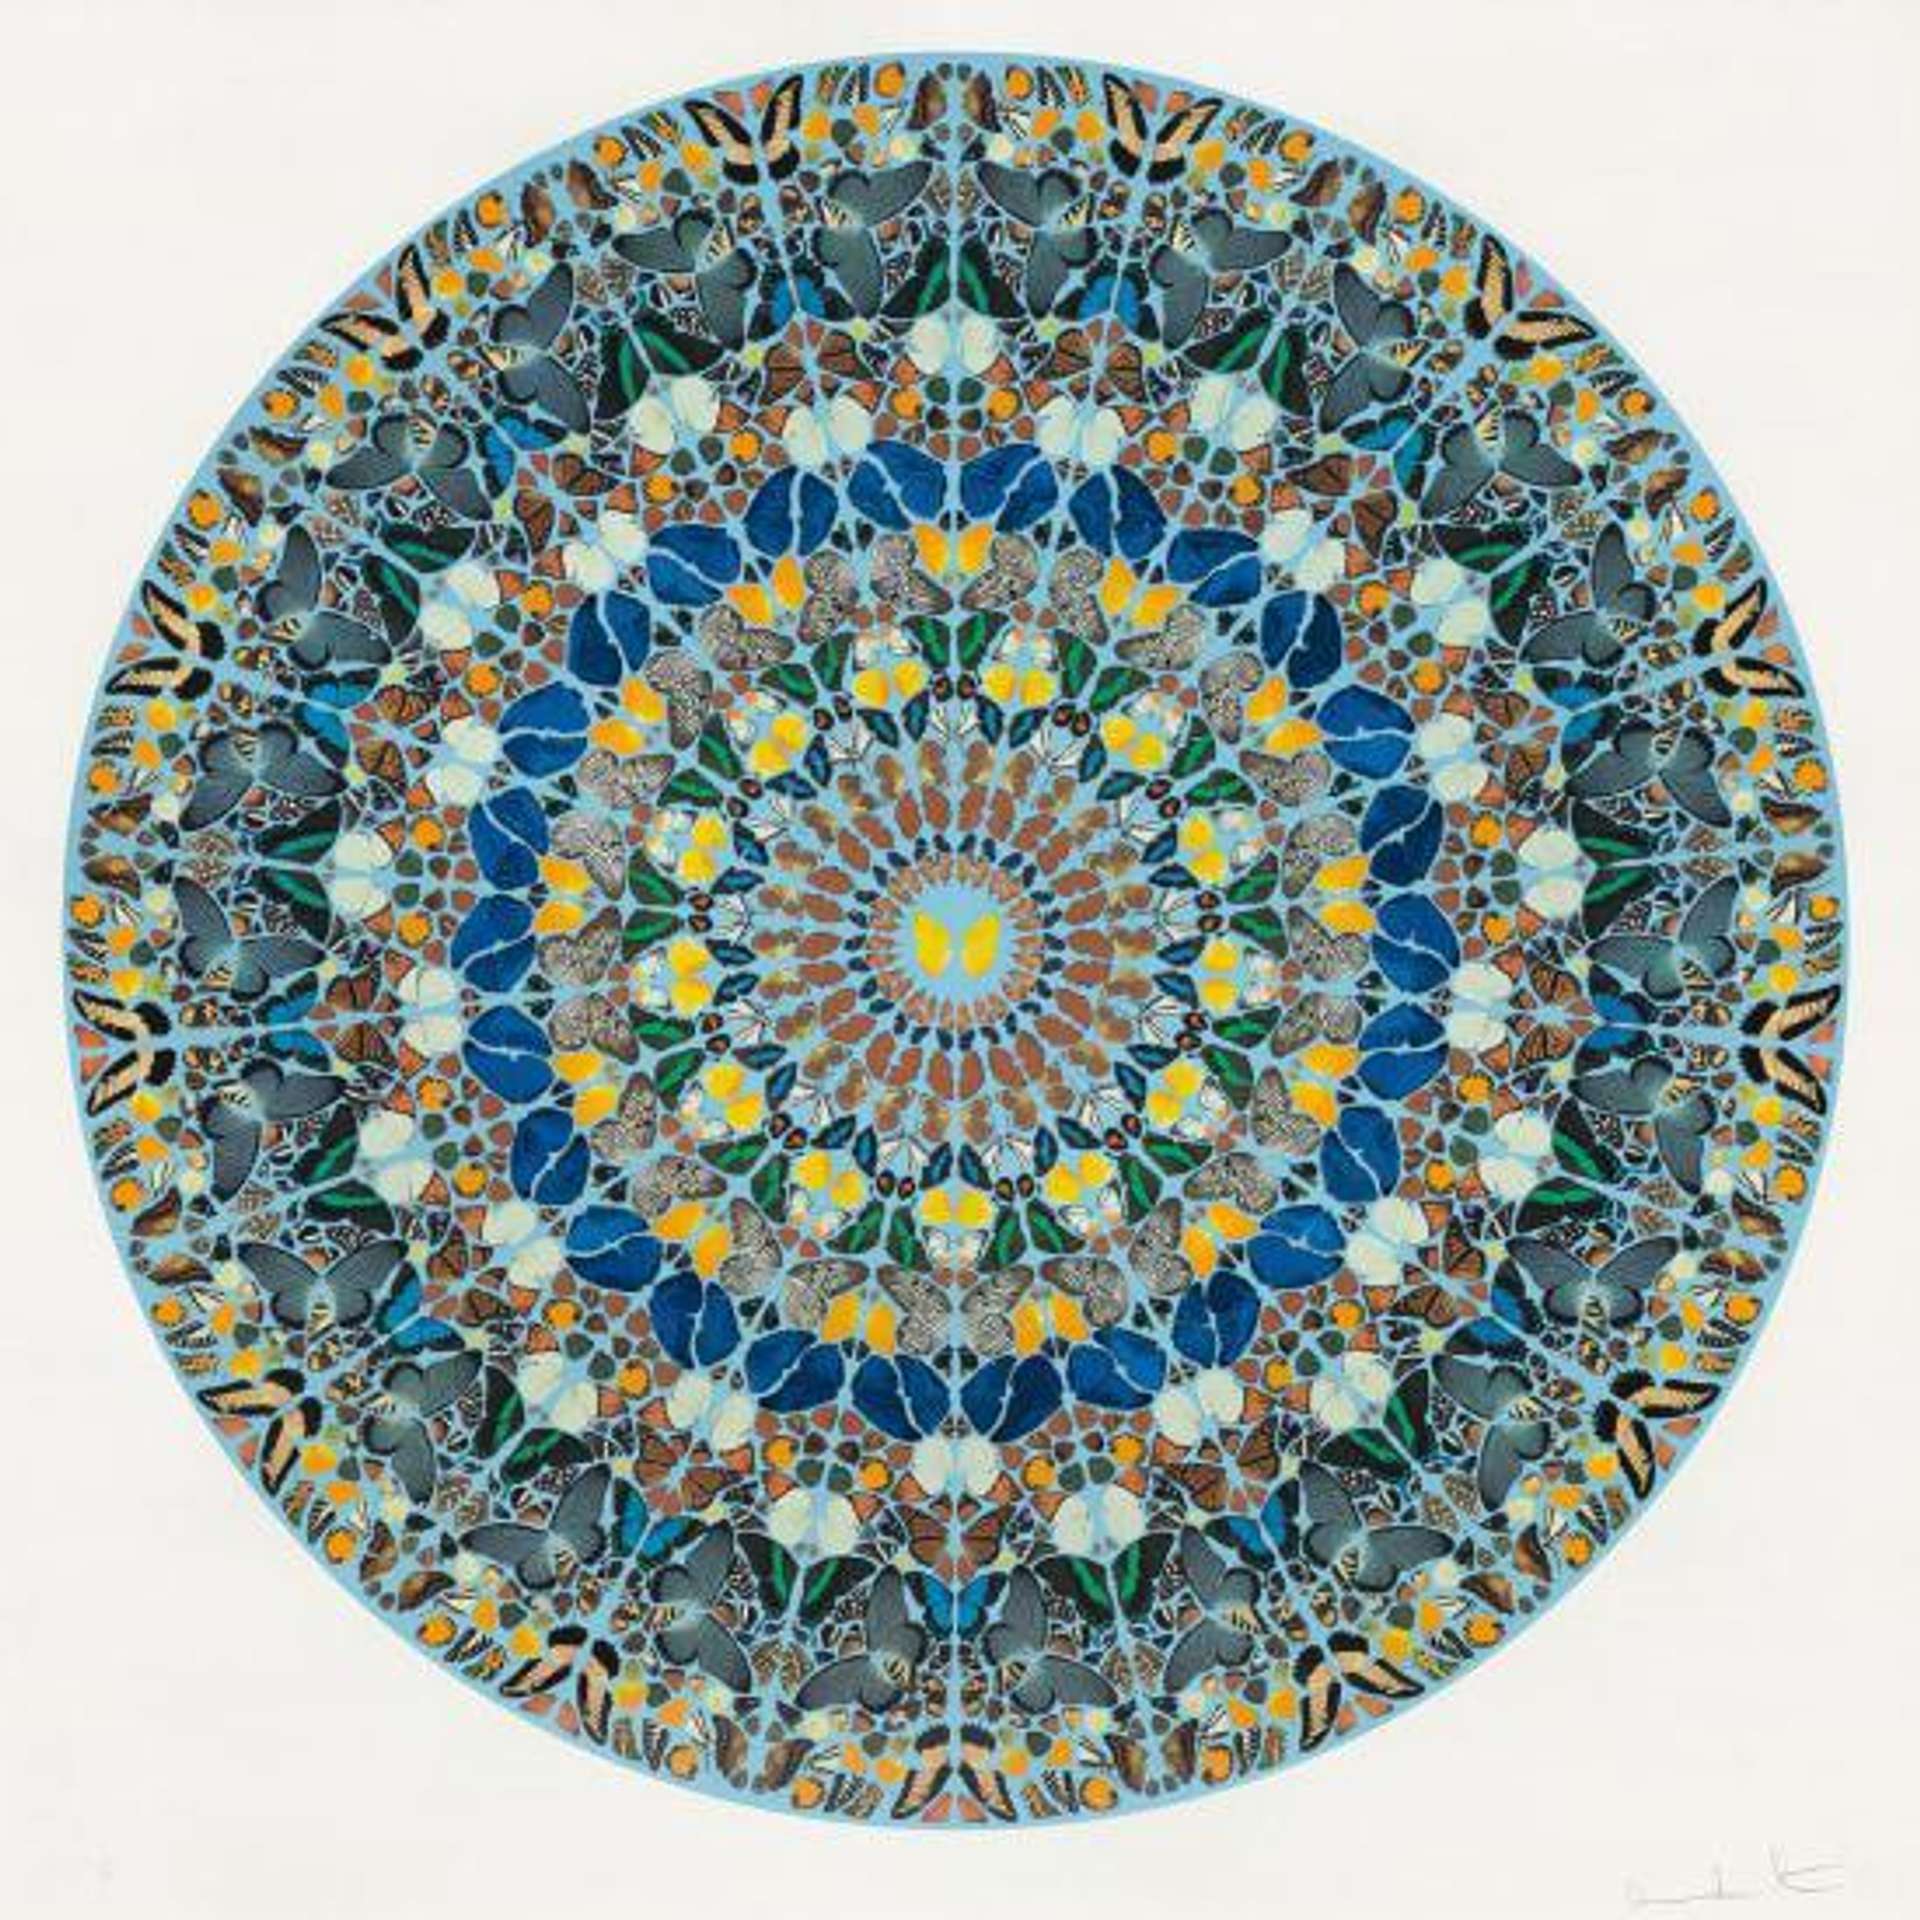 Mantra - Signed Print by Damien Hirst 2011 - MyArtBroker